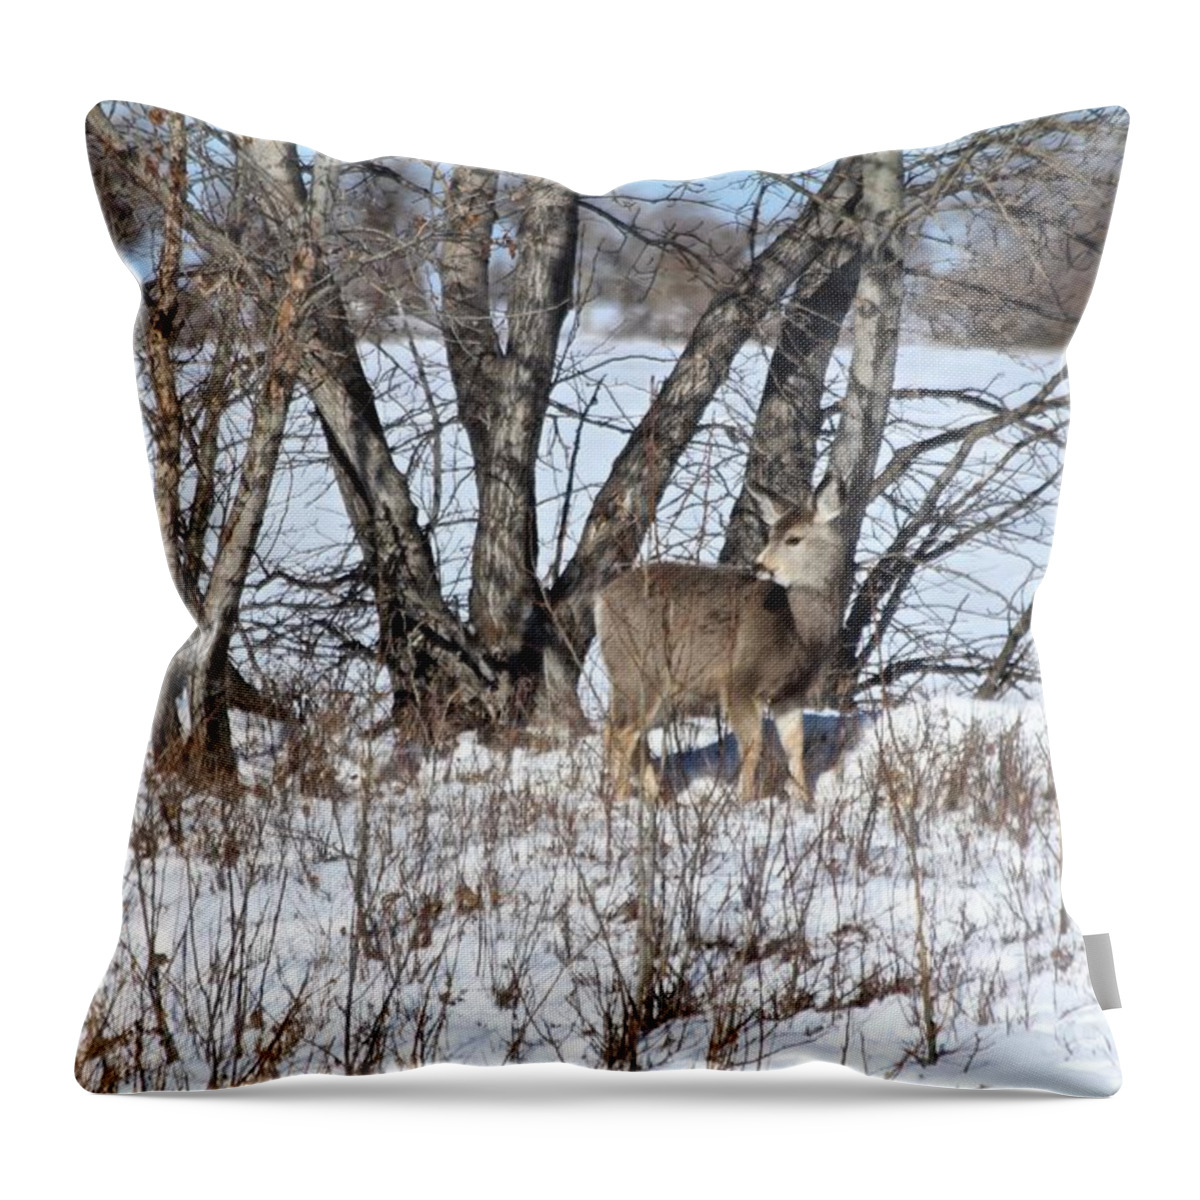 Mule Deer Throw Pillow featuring the photograph Mule Deer by Ann E Robson